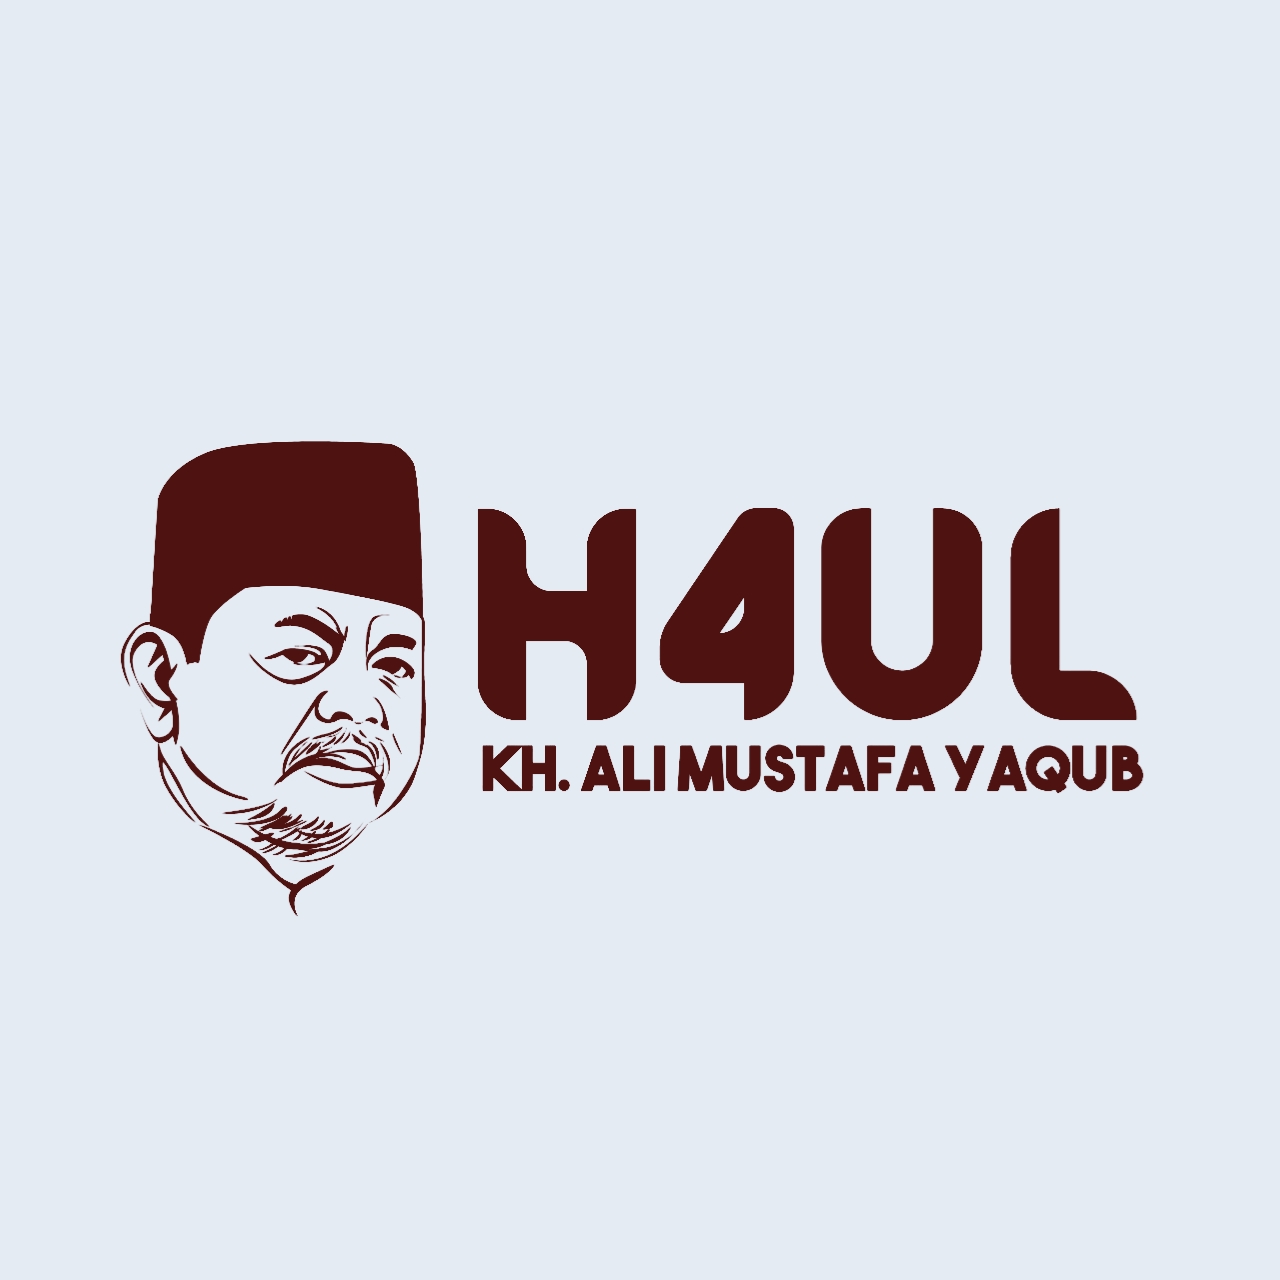 Haul Kiai Ali Mustafa Yaqub